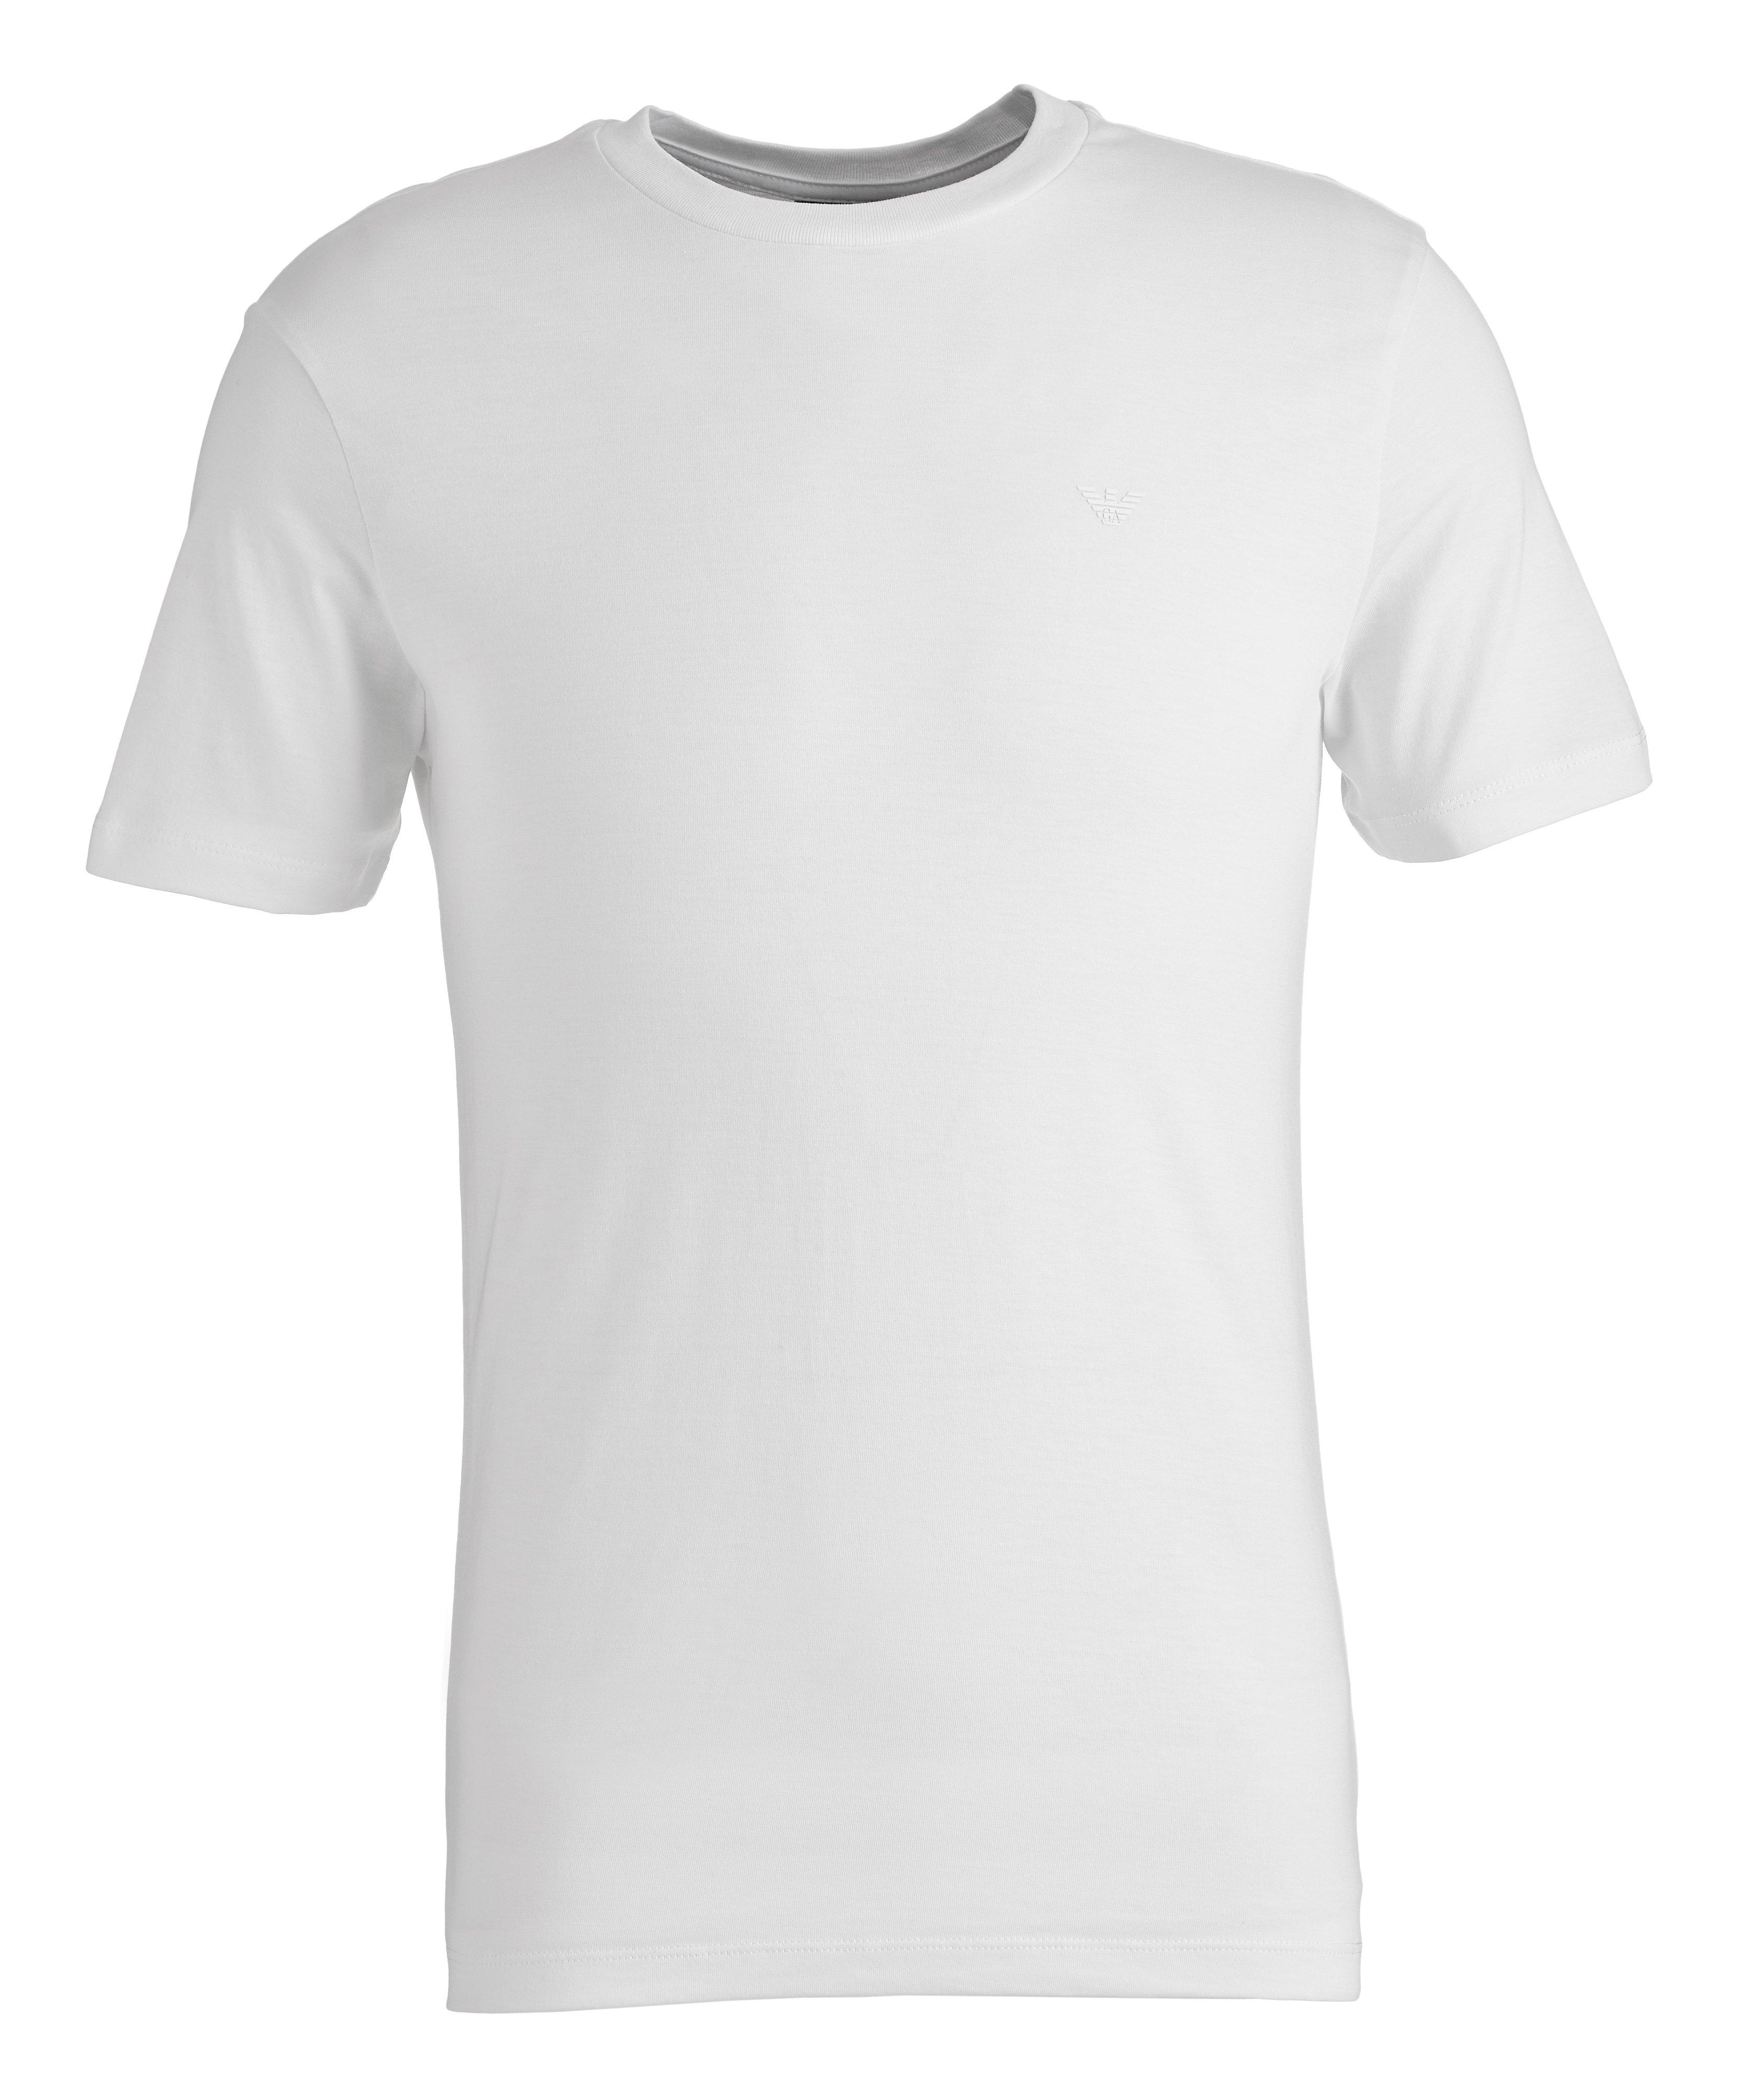 T-shirt en coton supima, collection Travel Essentials image 0